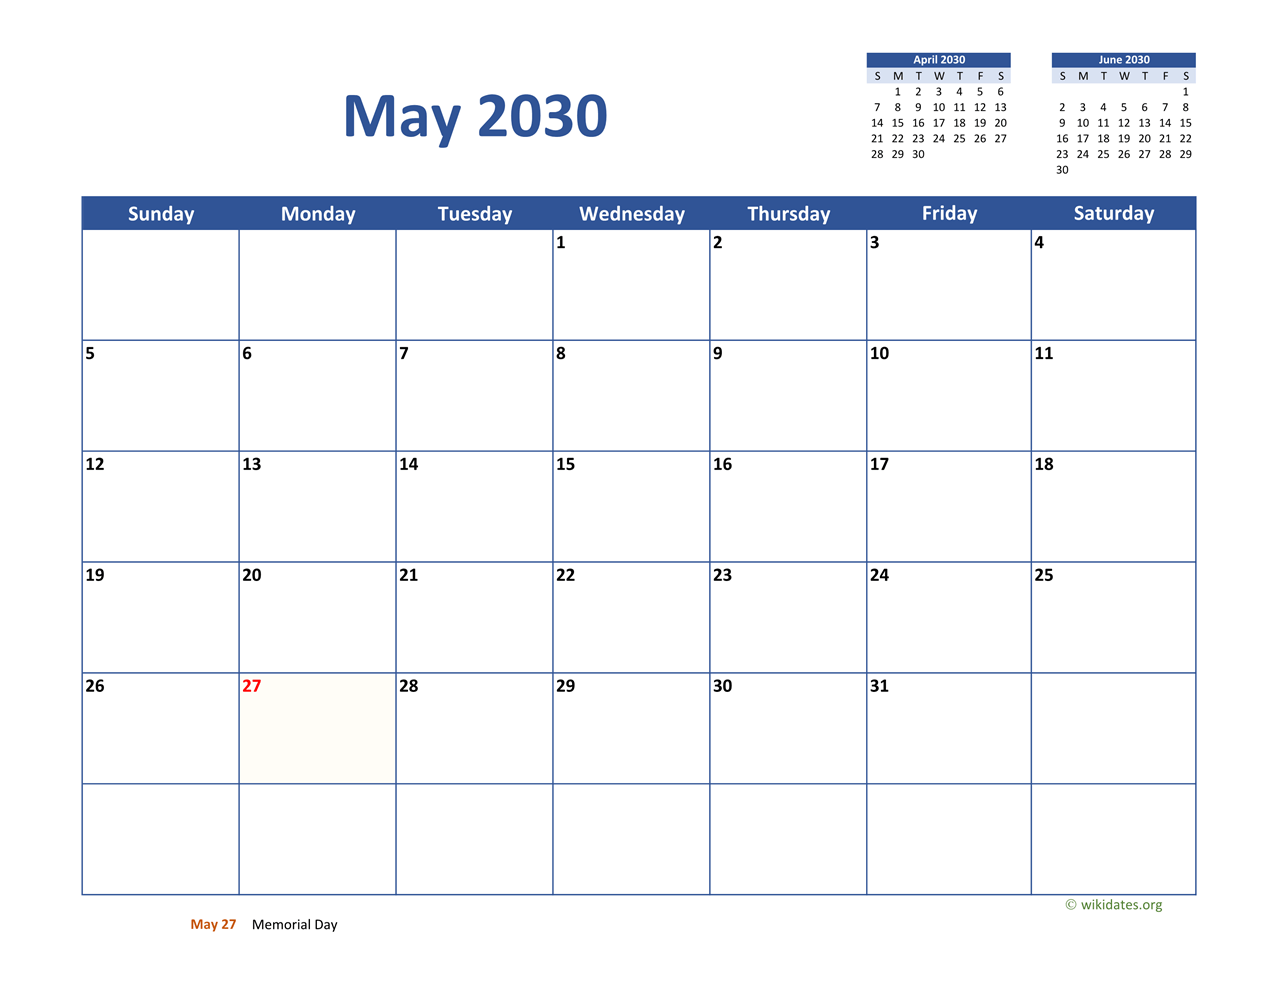 may-2030-calendar-classic-wikidates